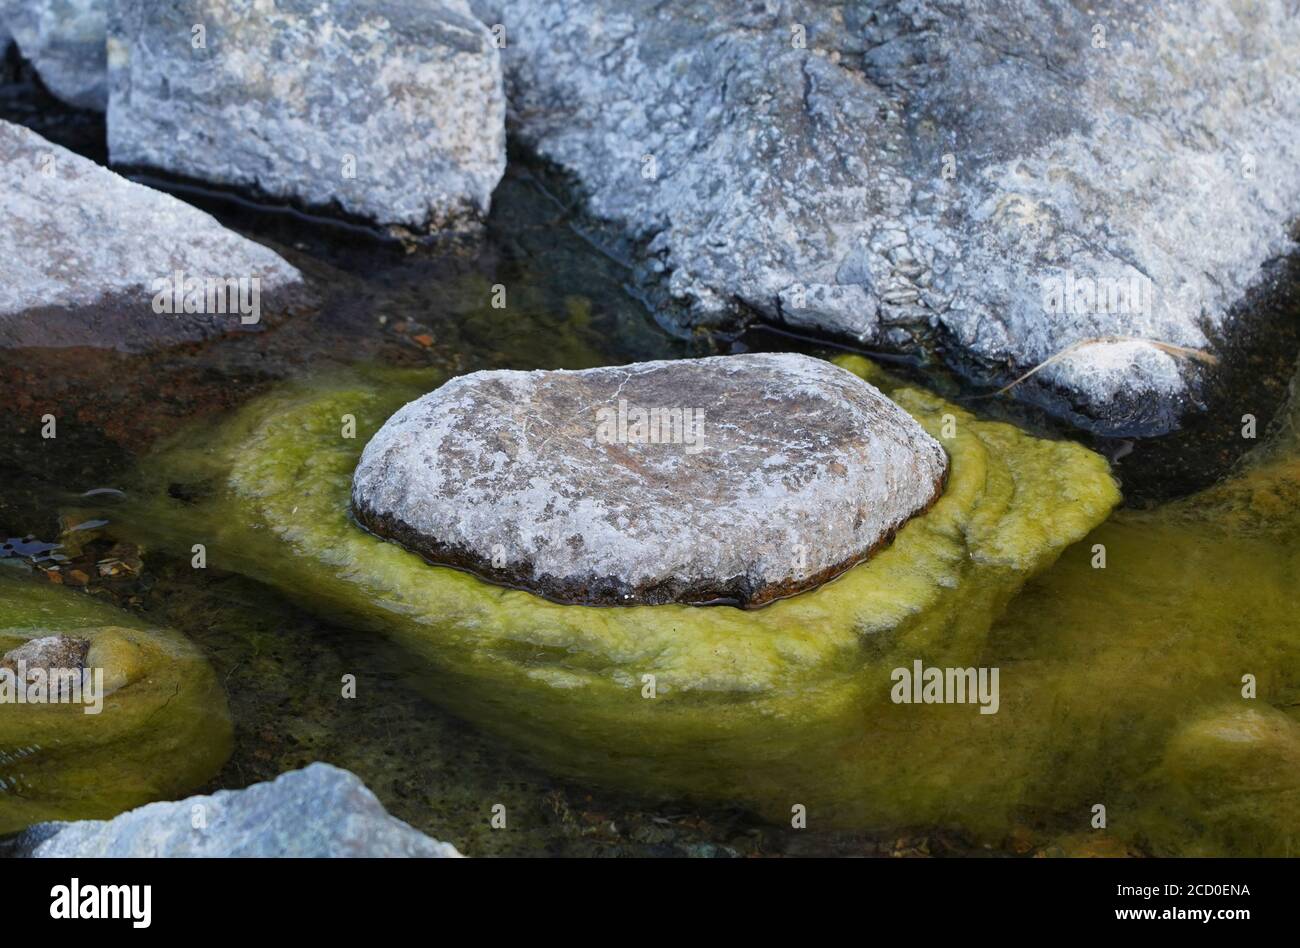 Rock in river with algae around, Spain. Stock Photo